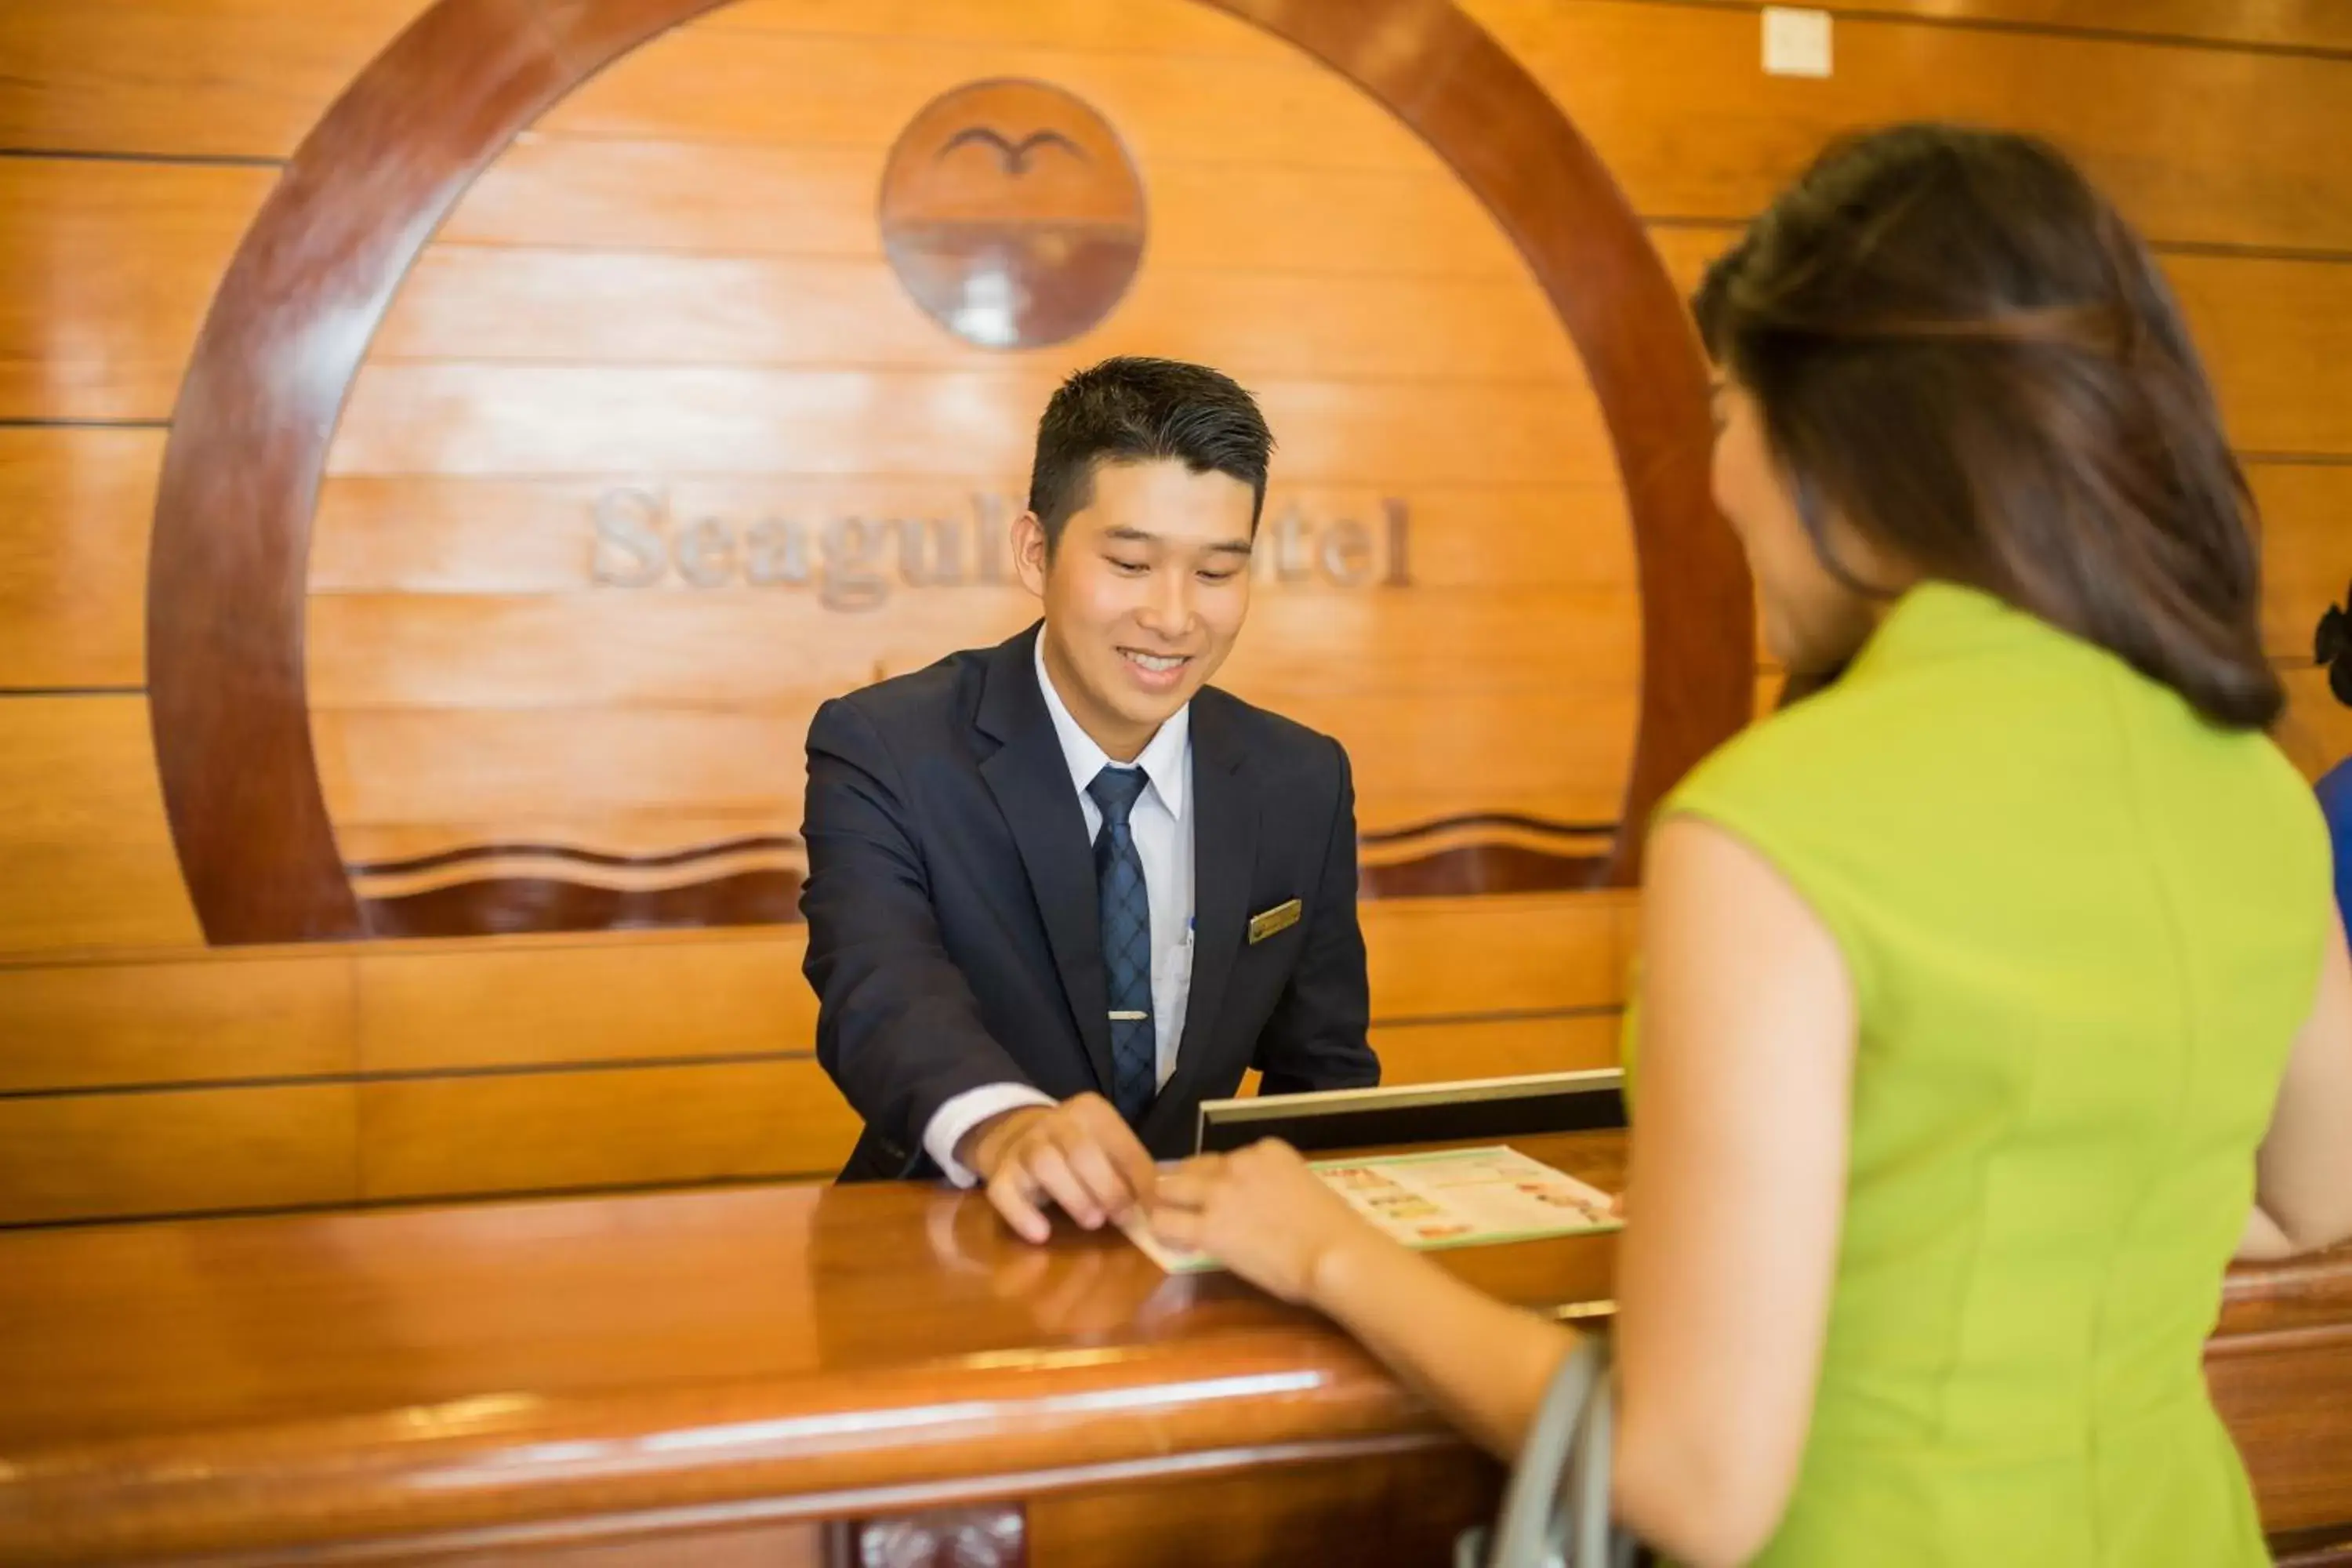 Lobby or reception, Lobby/Reception in Seagull Hotel